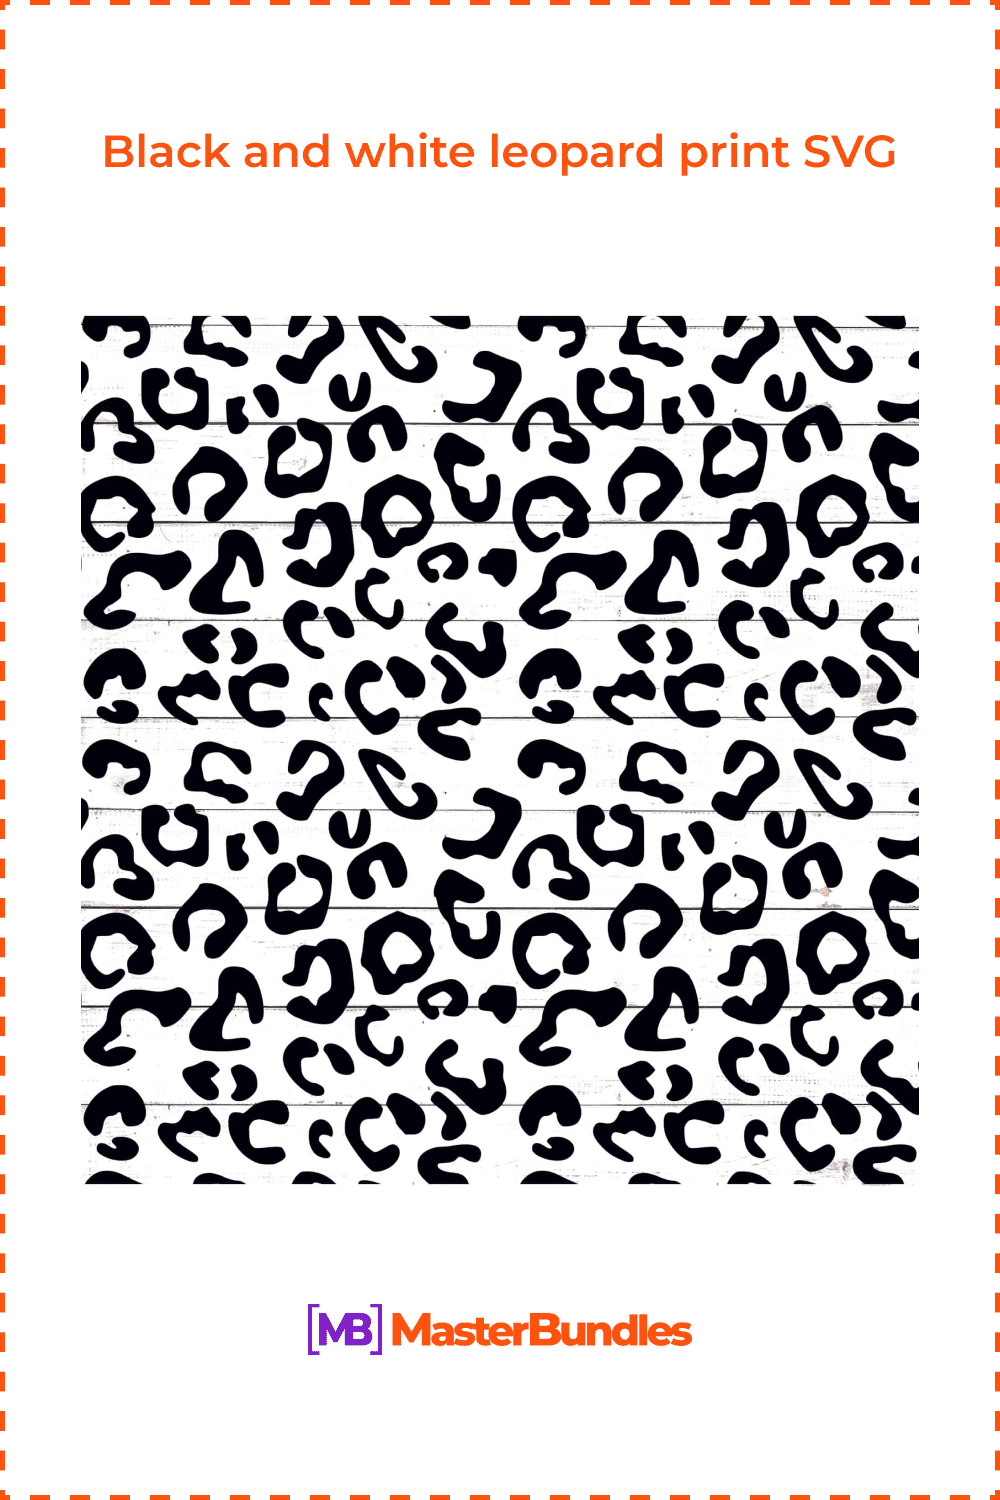 Black and white leopard print SVG.